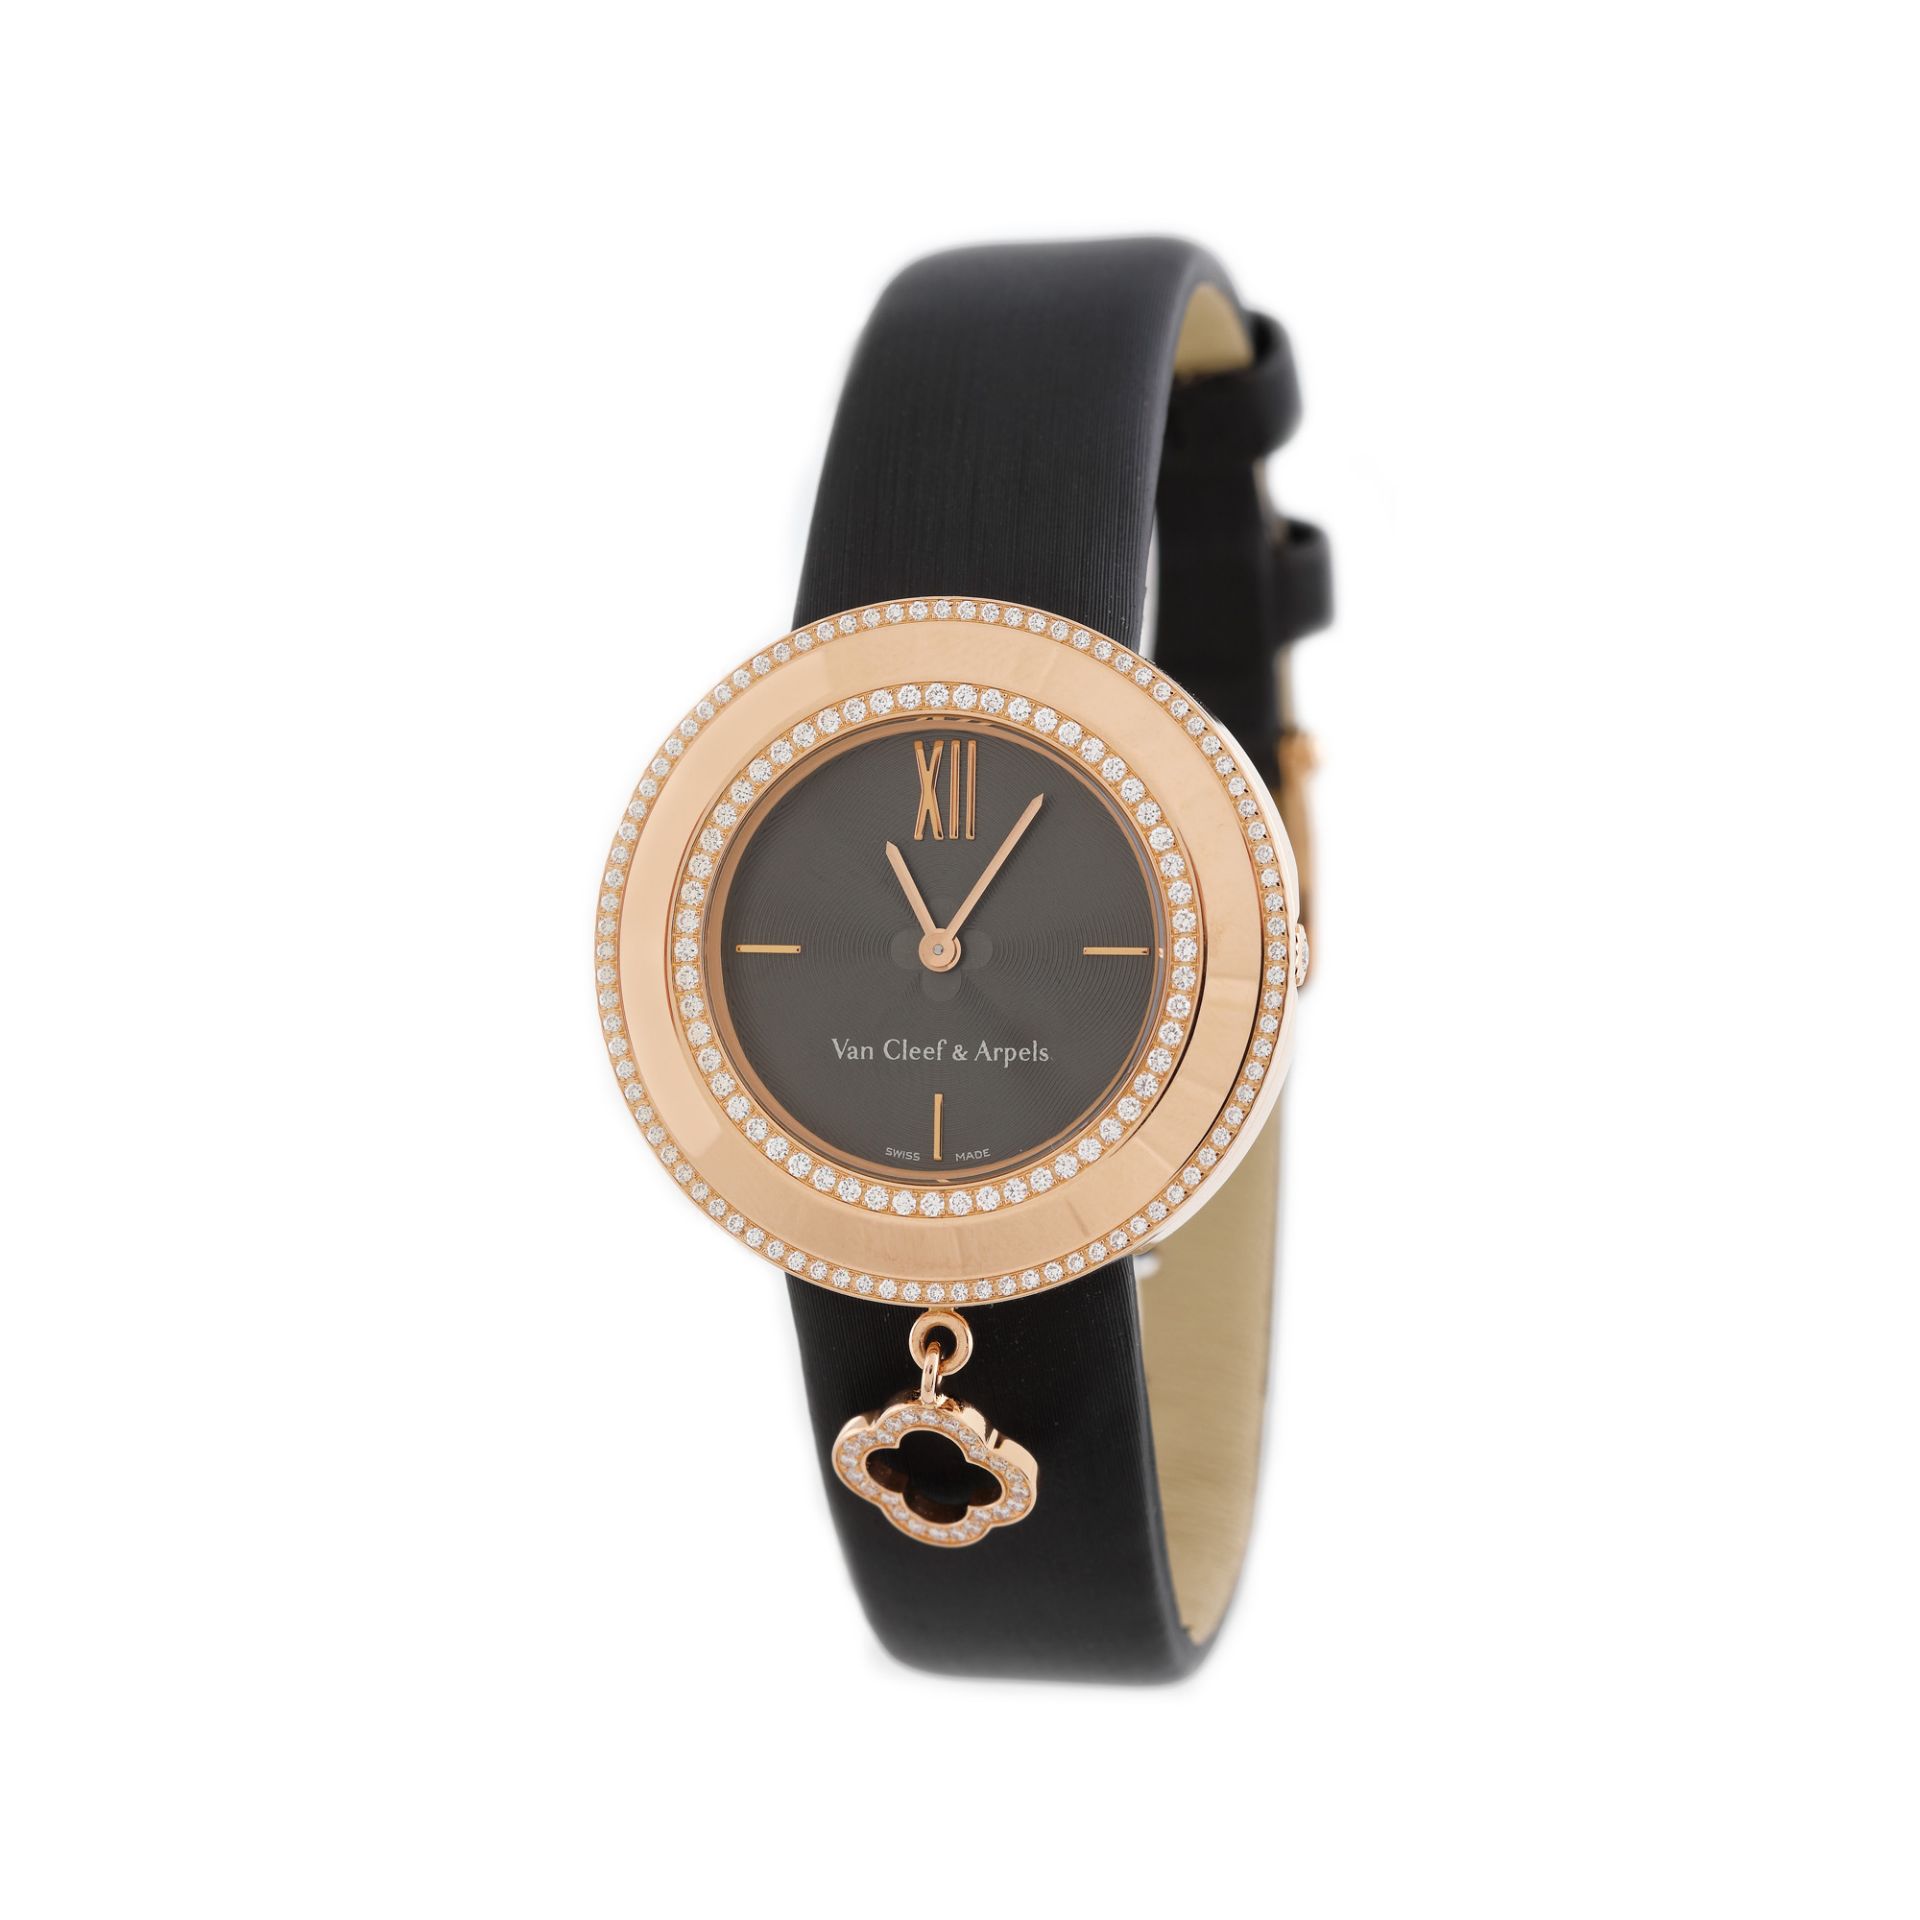 Van Cleef & Arpels Charms wristwatch, gold, women, certificate of authenticityVan Cleef & Arpel